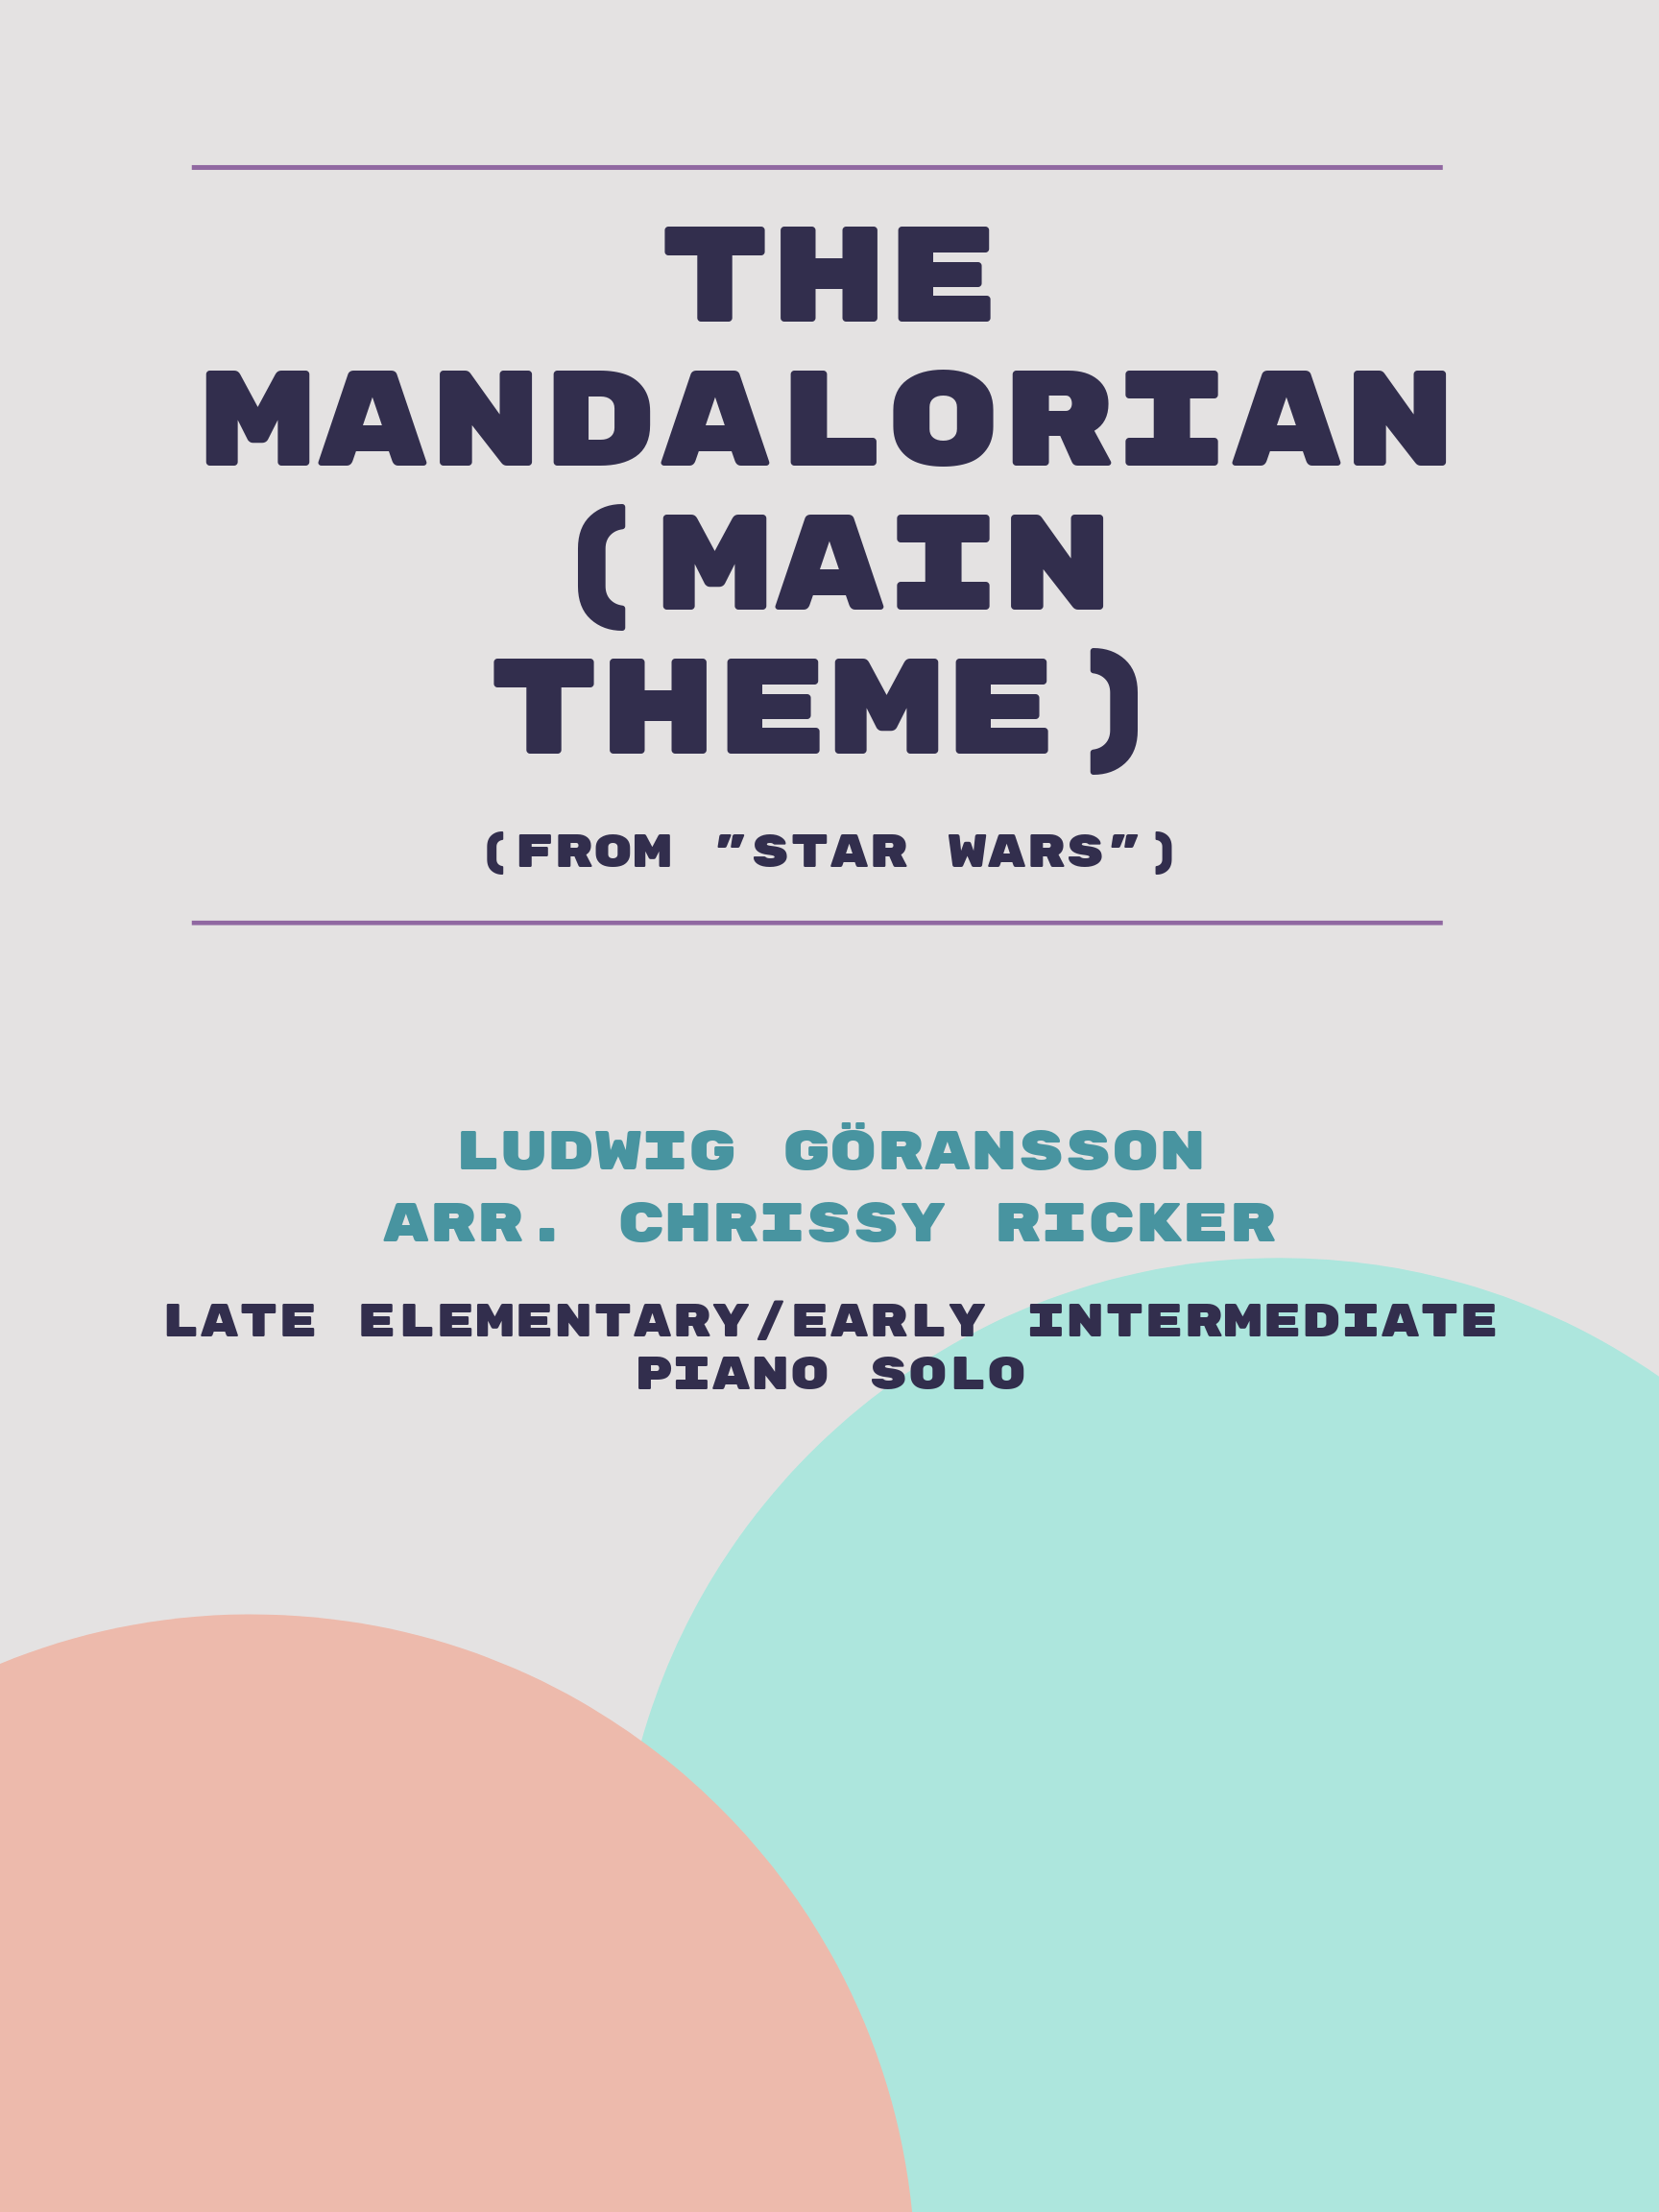 The Mandalorian (Main Theme) by Ludwig Göransson